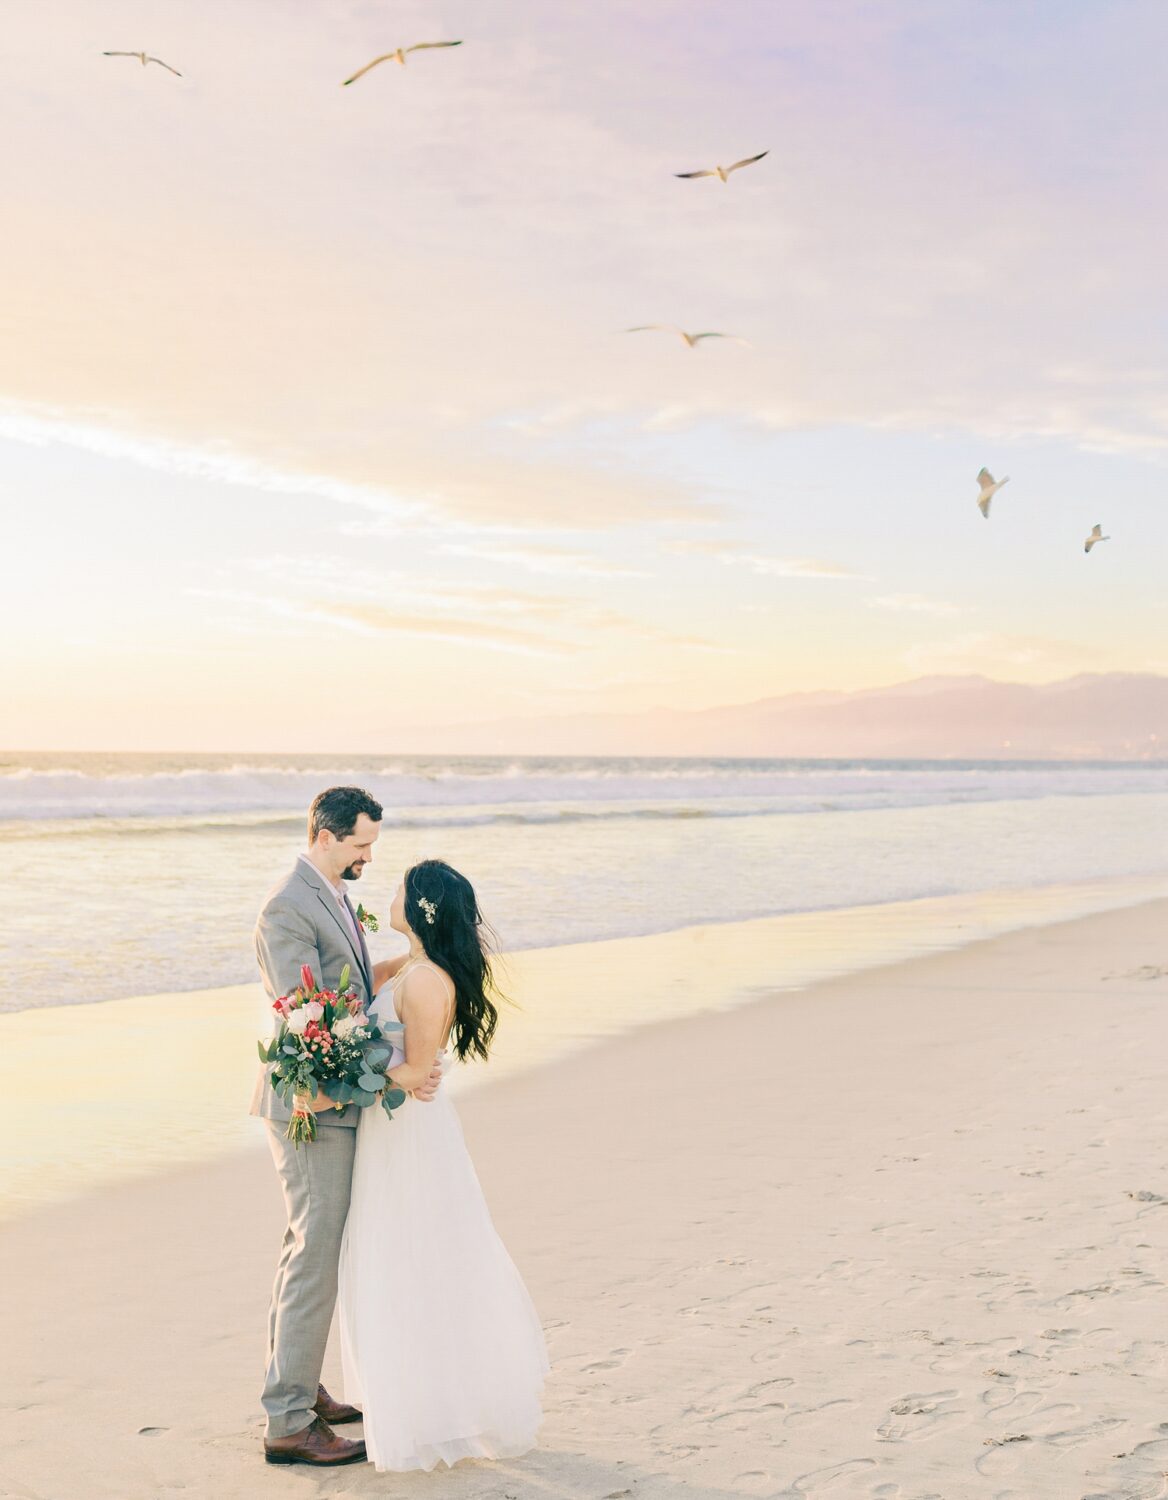 Home - Elyana Photography | Los Angeles Wedding Photographer